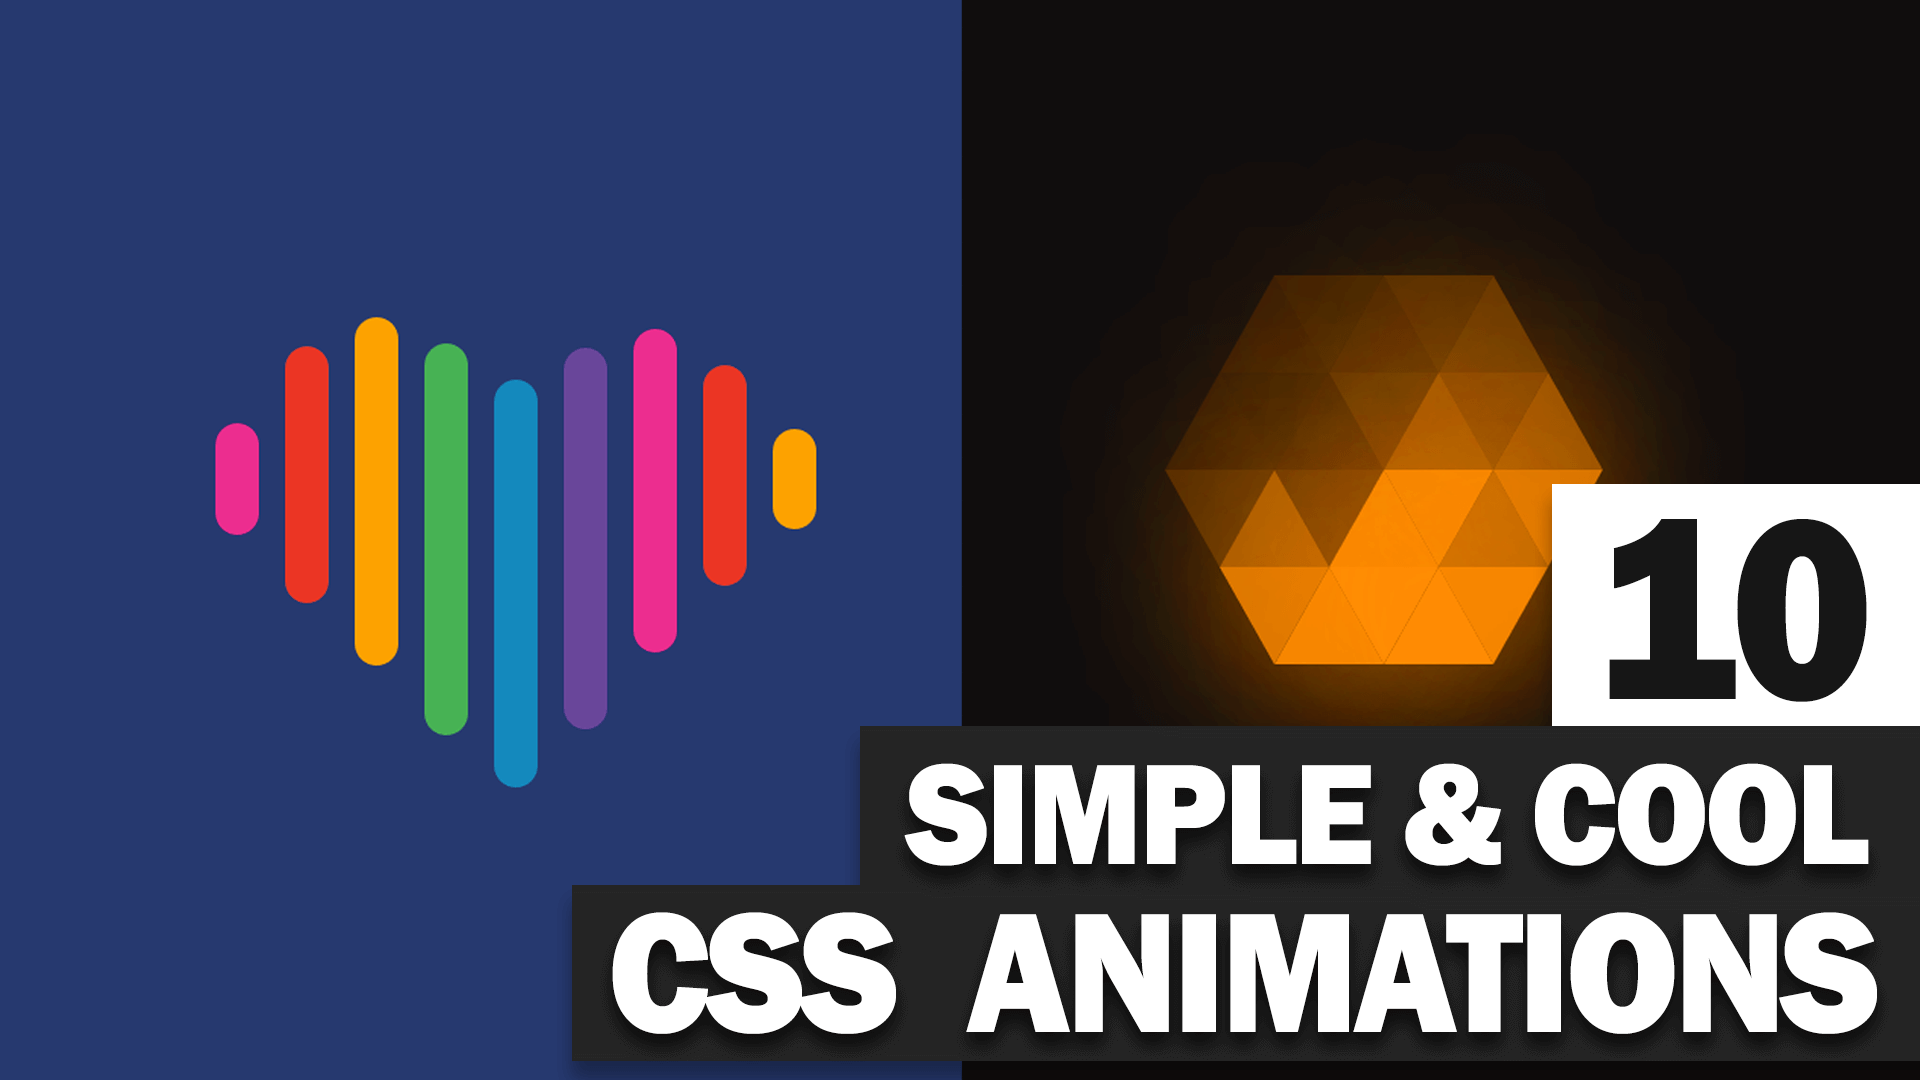 Animated html. Animation CSS. Html анимация. Css3 анимация. CSS animation examples.